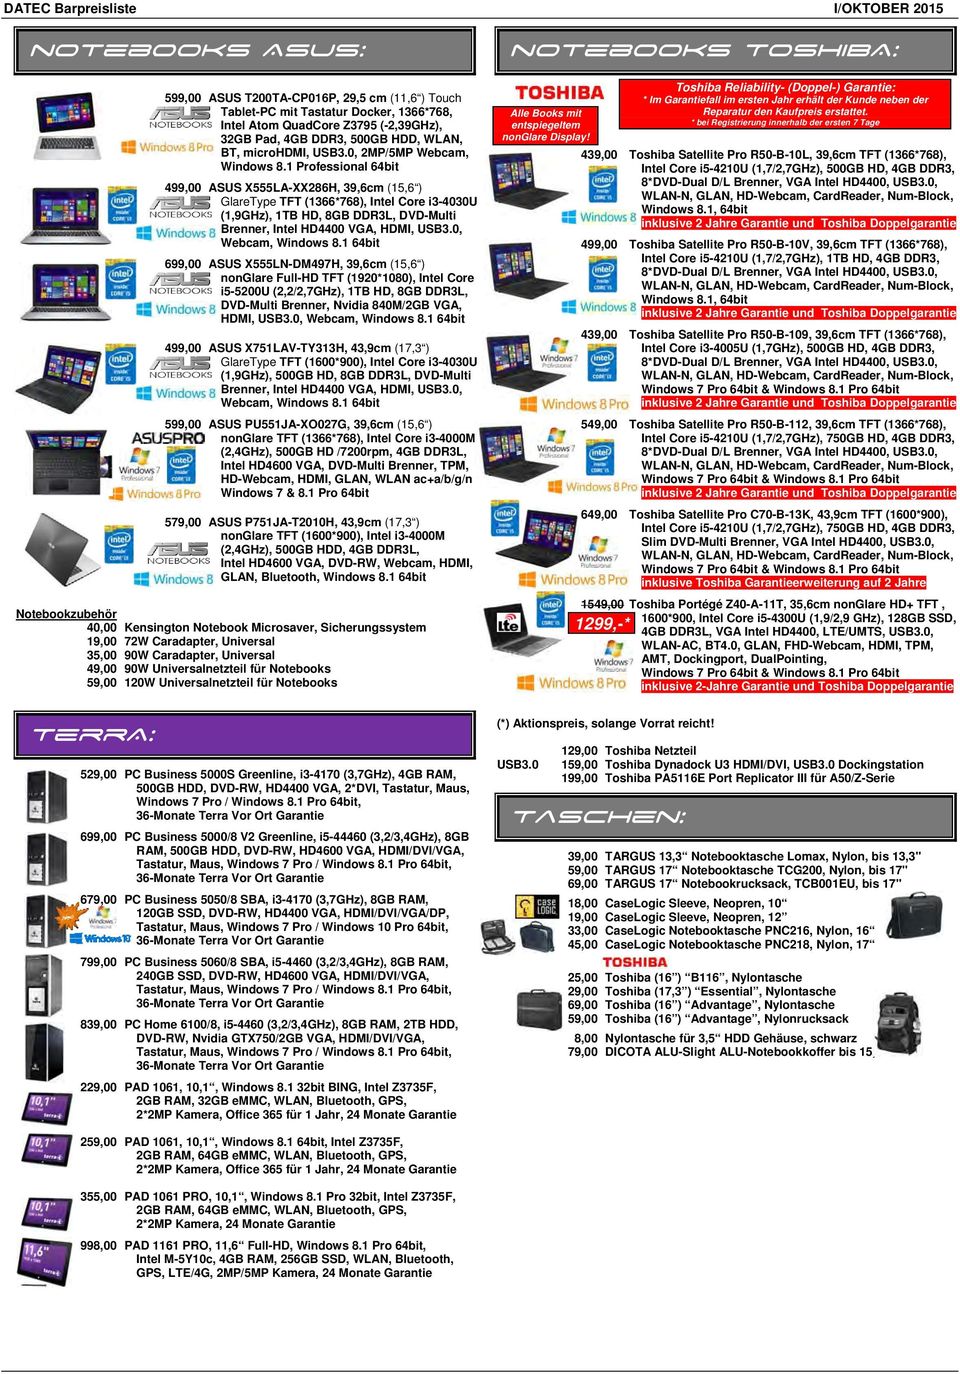 1 Professional 64bit 499,00 ASUS X555LA-XX286H, 39,6cm (15,6 ) GlareType TFT (1366*768), Intel Core i3-4030u (1,9GHz), 1TB HD, 8GB DDR3L, DVD-Multi Brenner, Intel HD4400 VGA, HDMI,, Webcam, Windows 8.